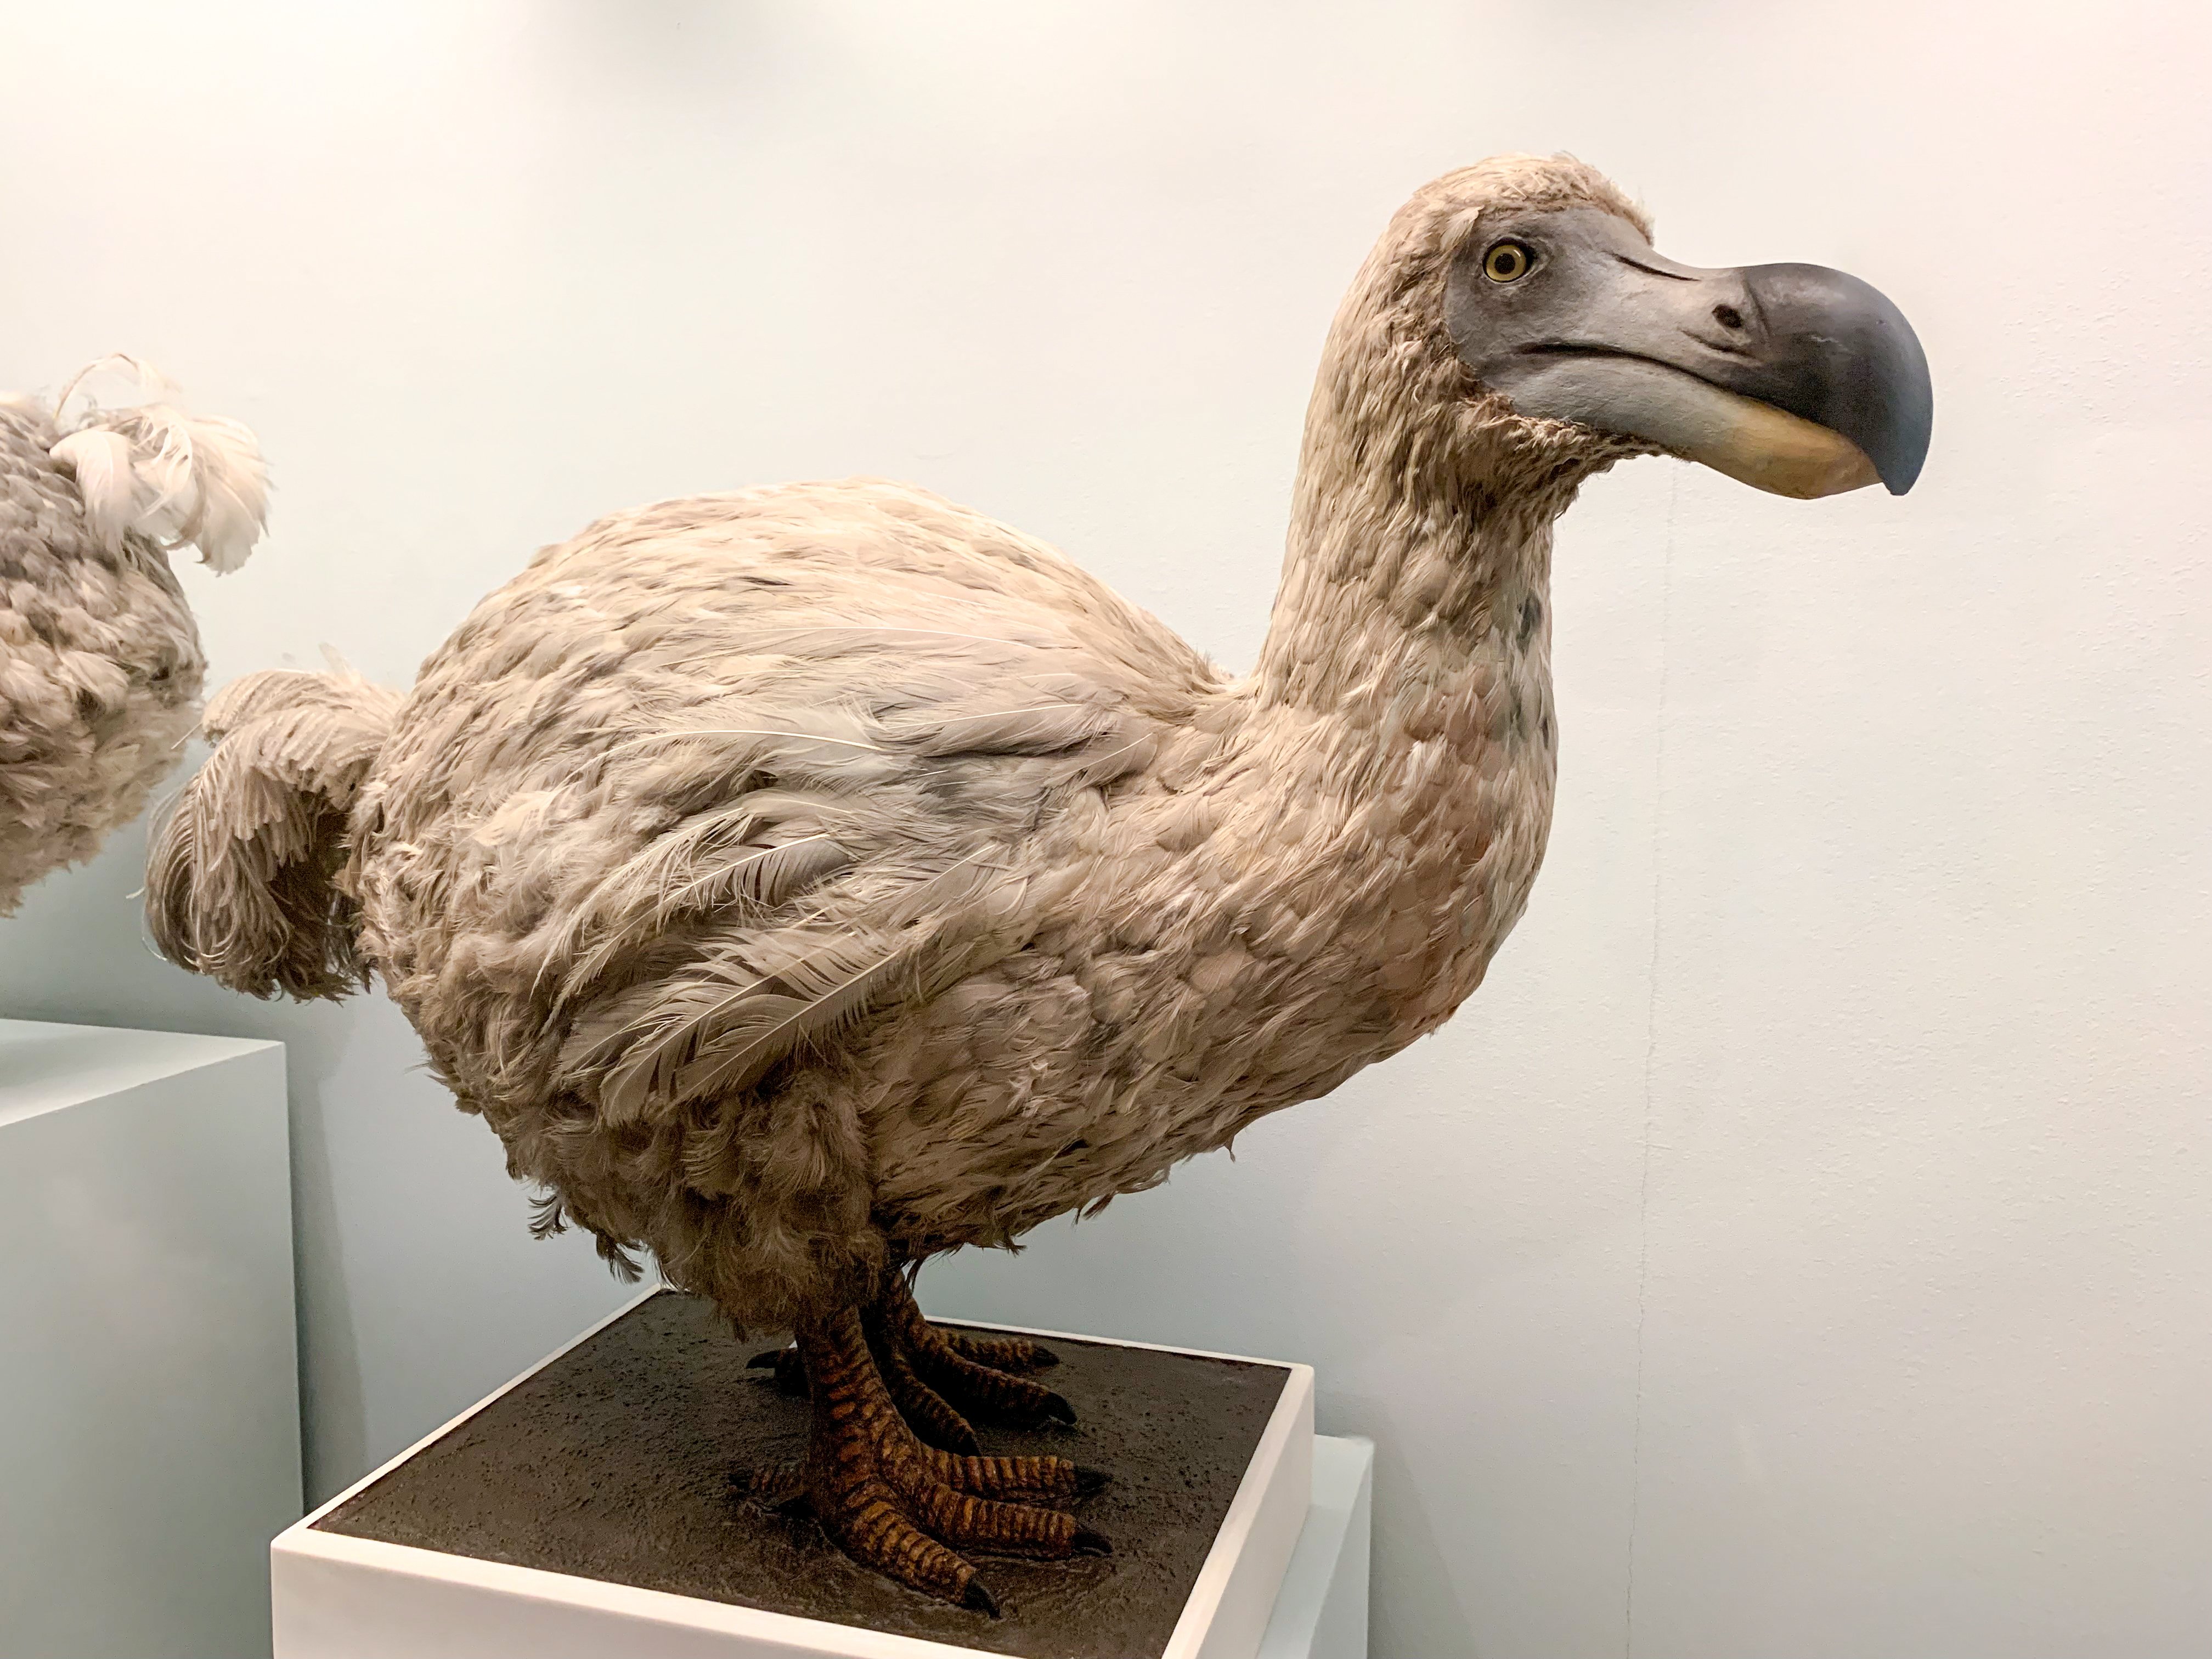 A stuffed Dodo bird placed in a museum. | Source: Shutterstock